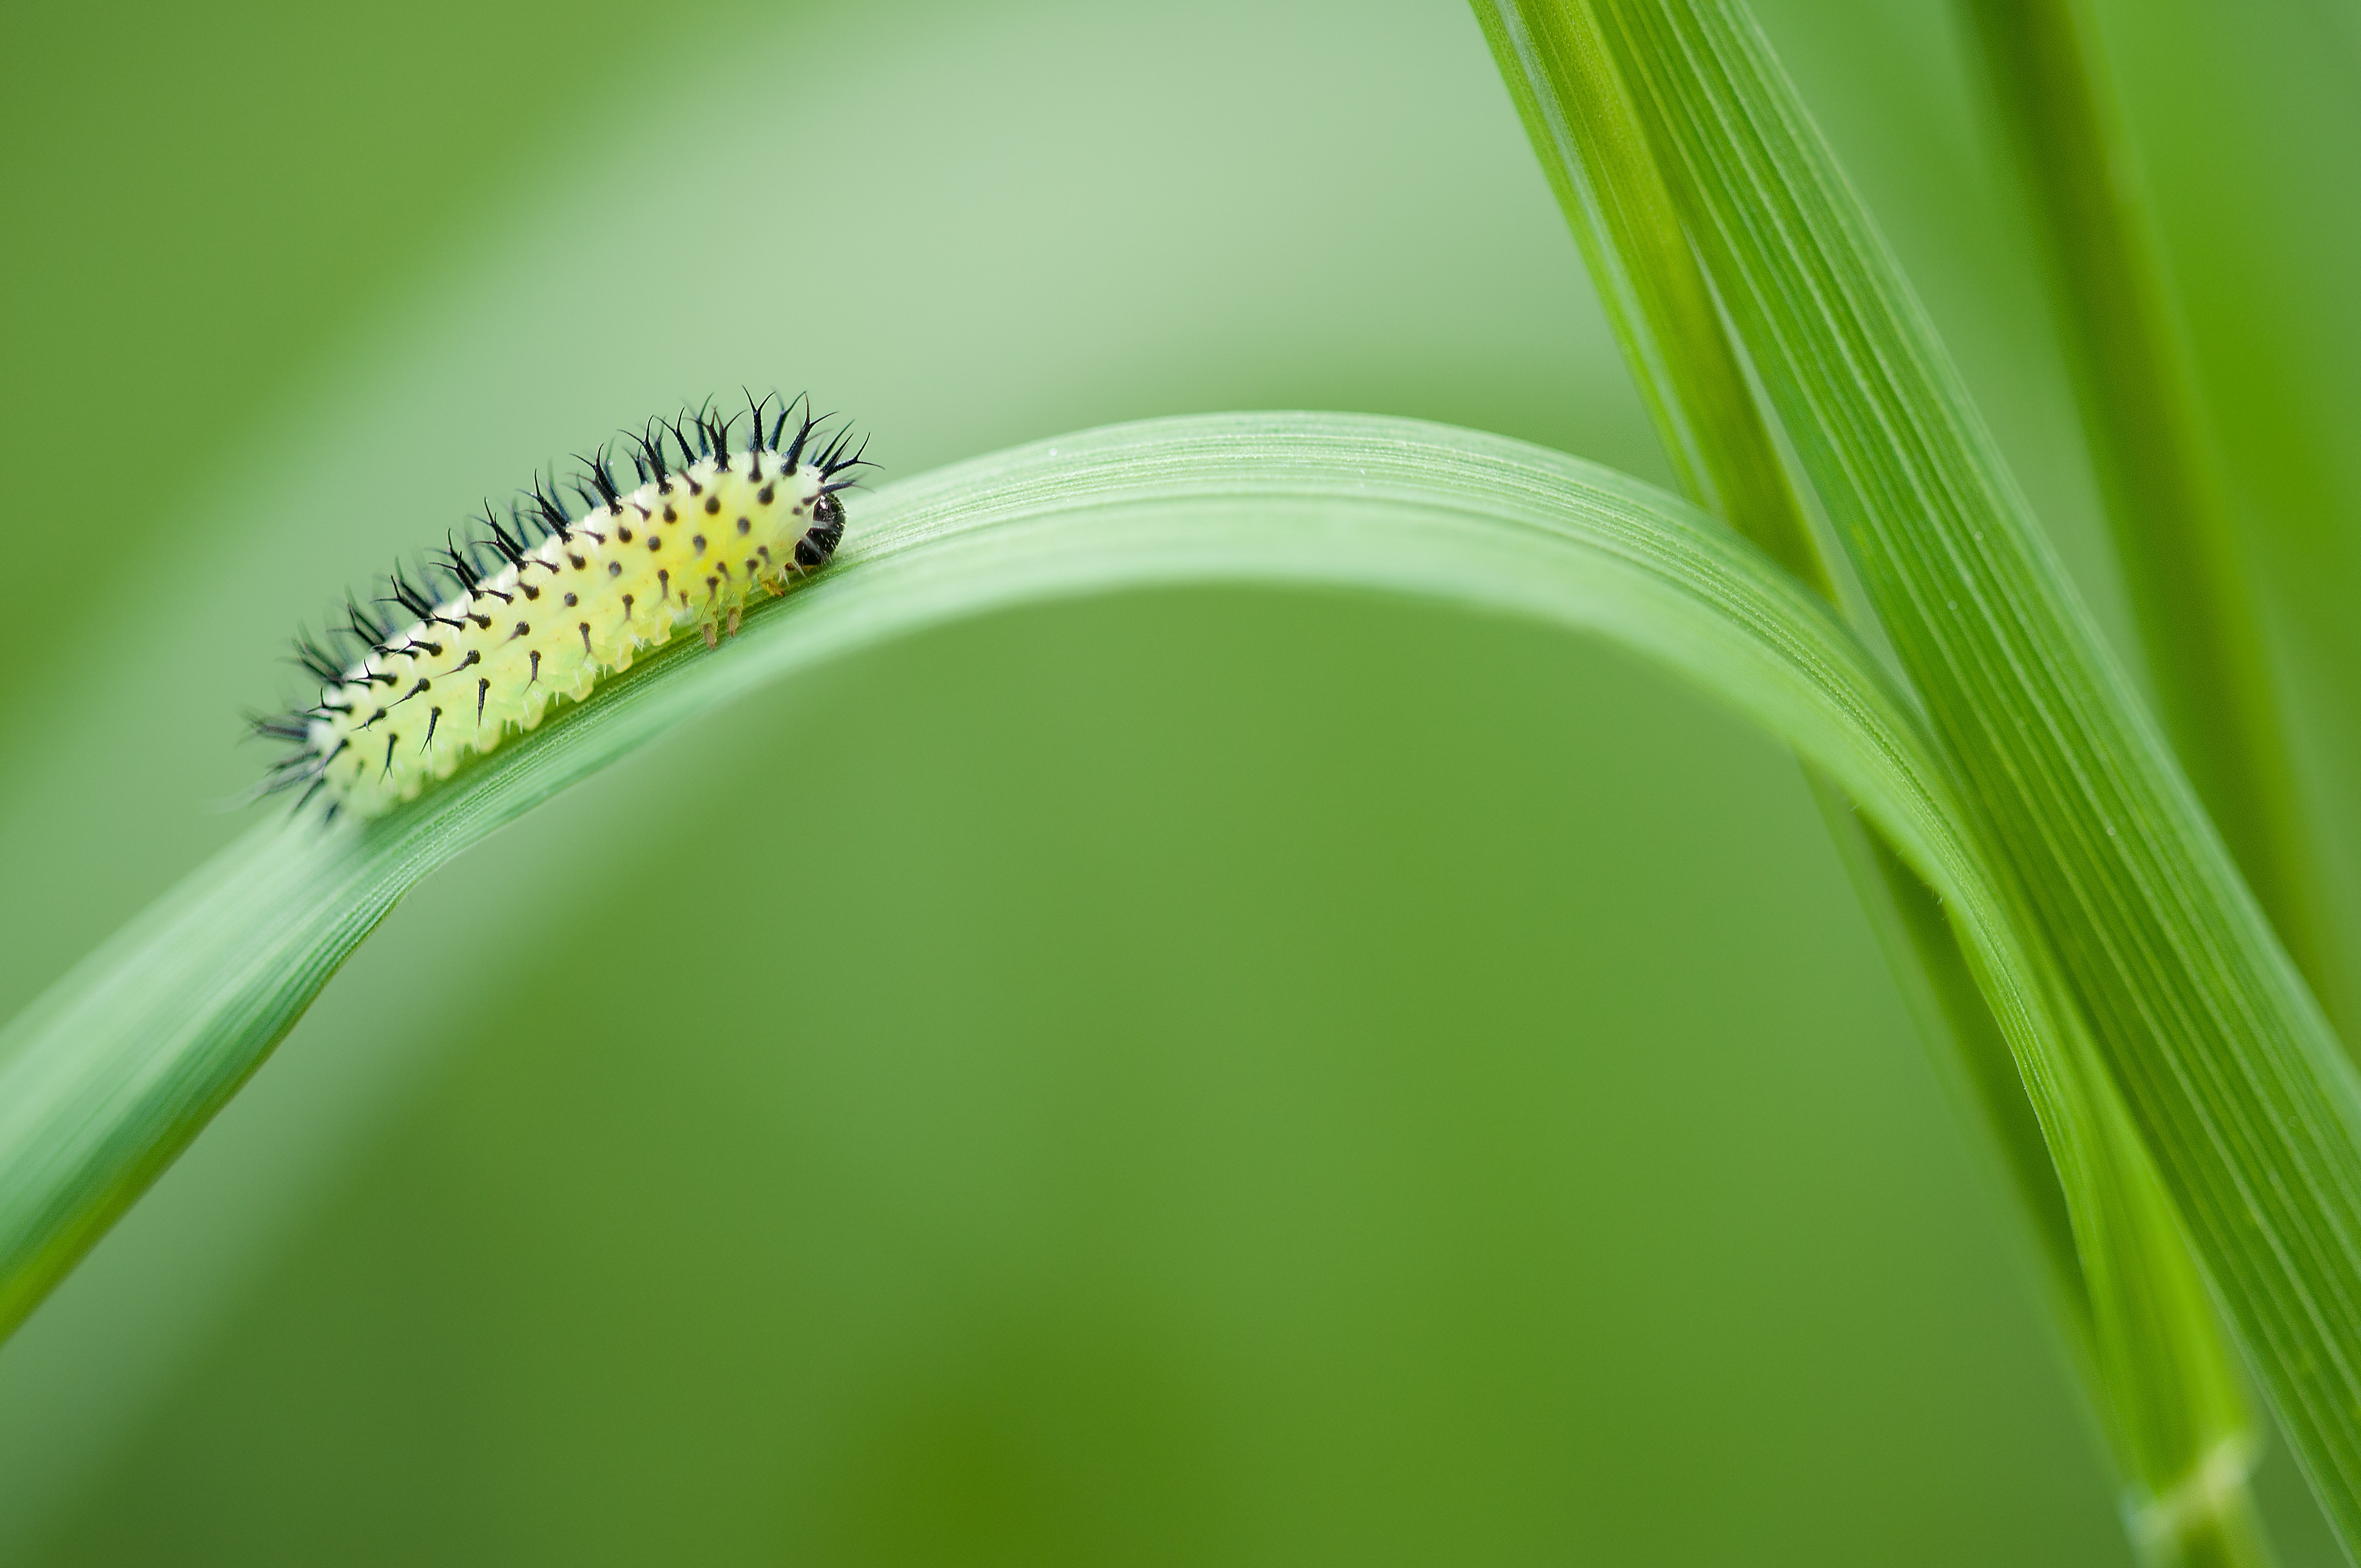 A caterpillar crawls through the grass.